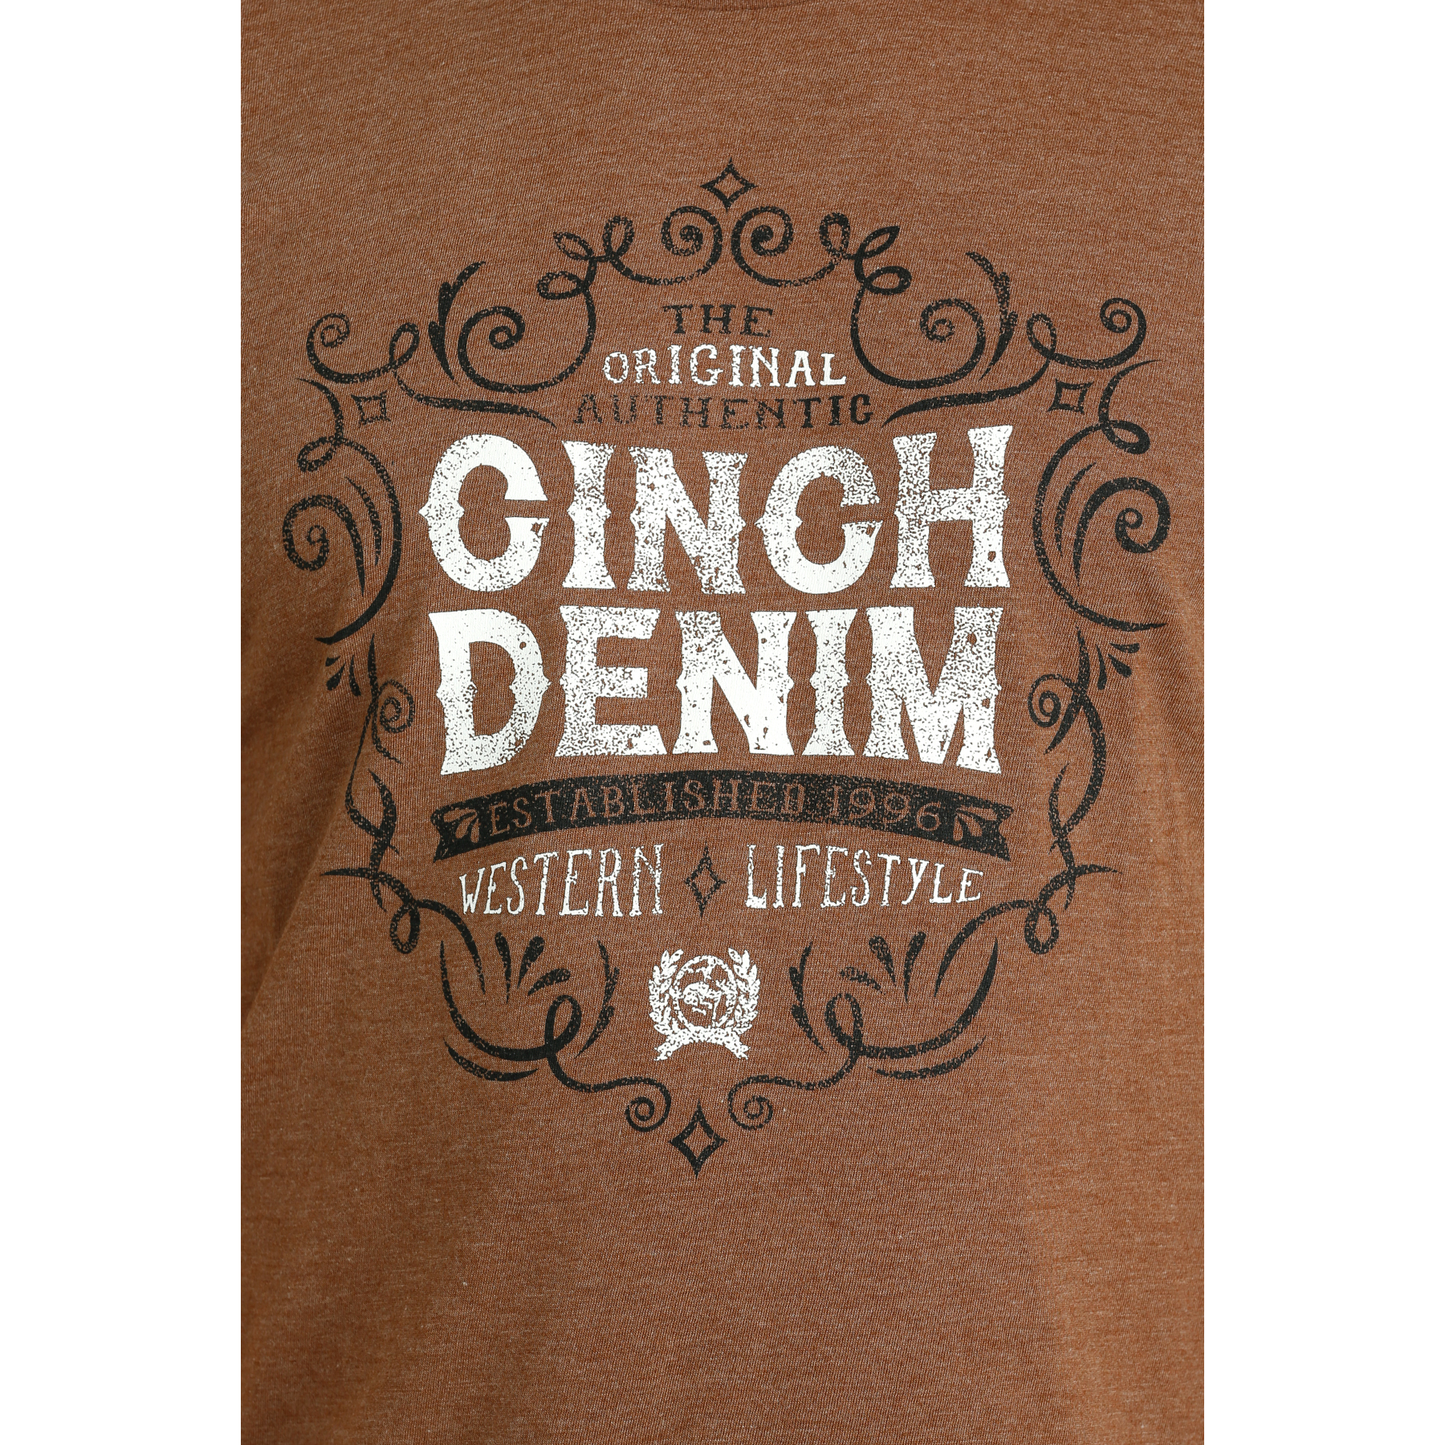 Cinch Men's Copper "Cinch Denim" Graphic T-Shirt MTT1690595